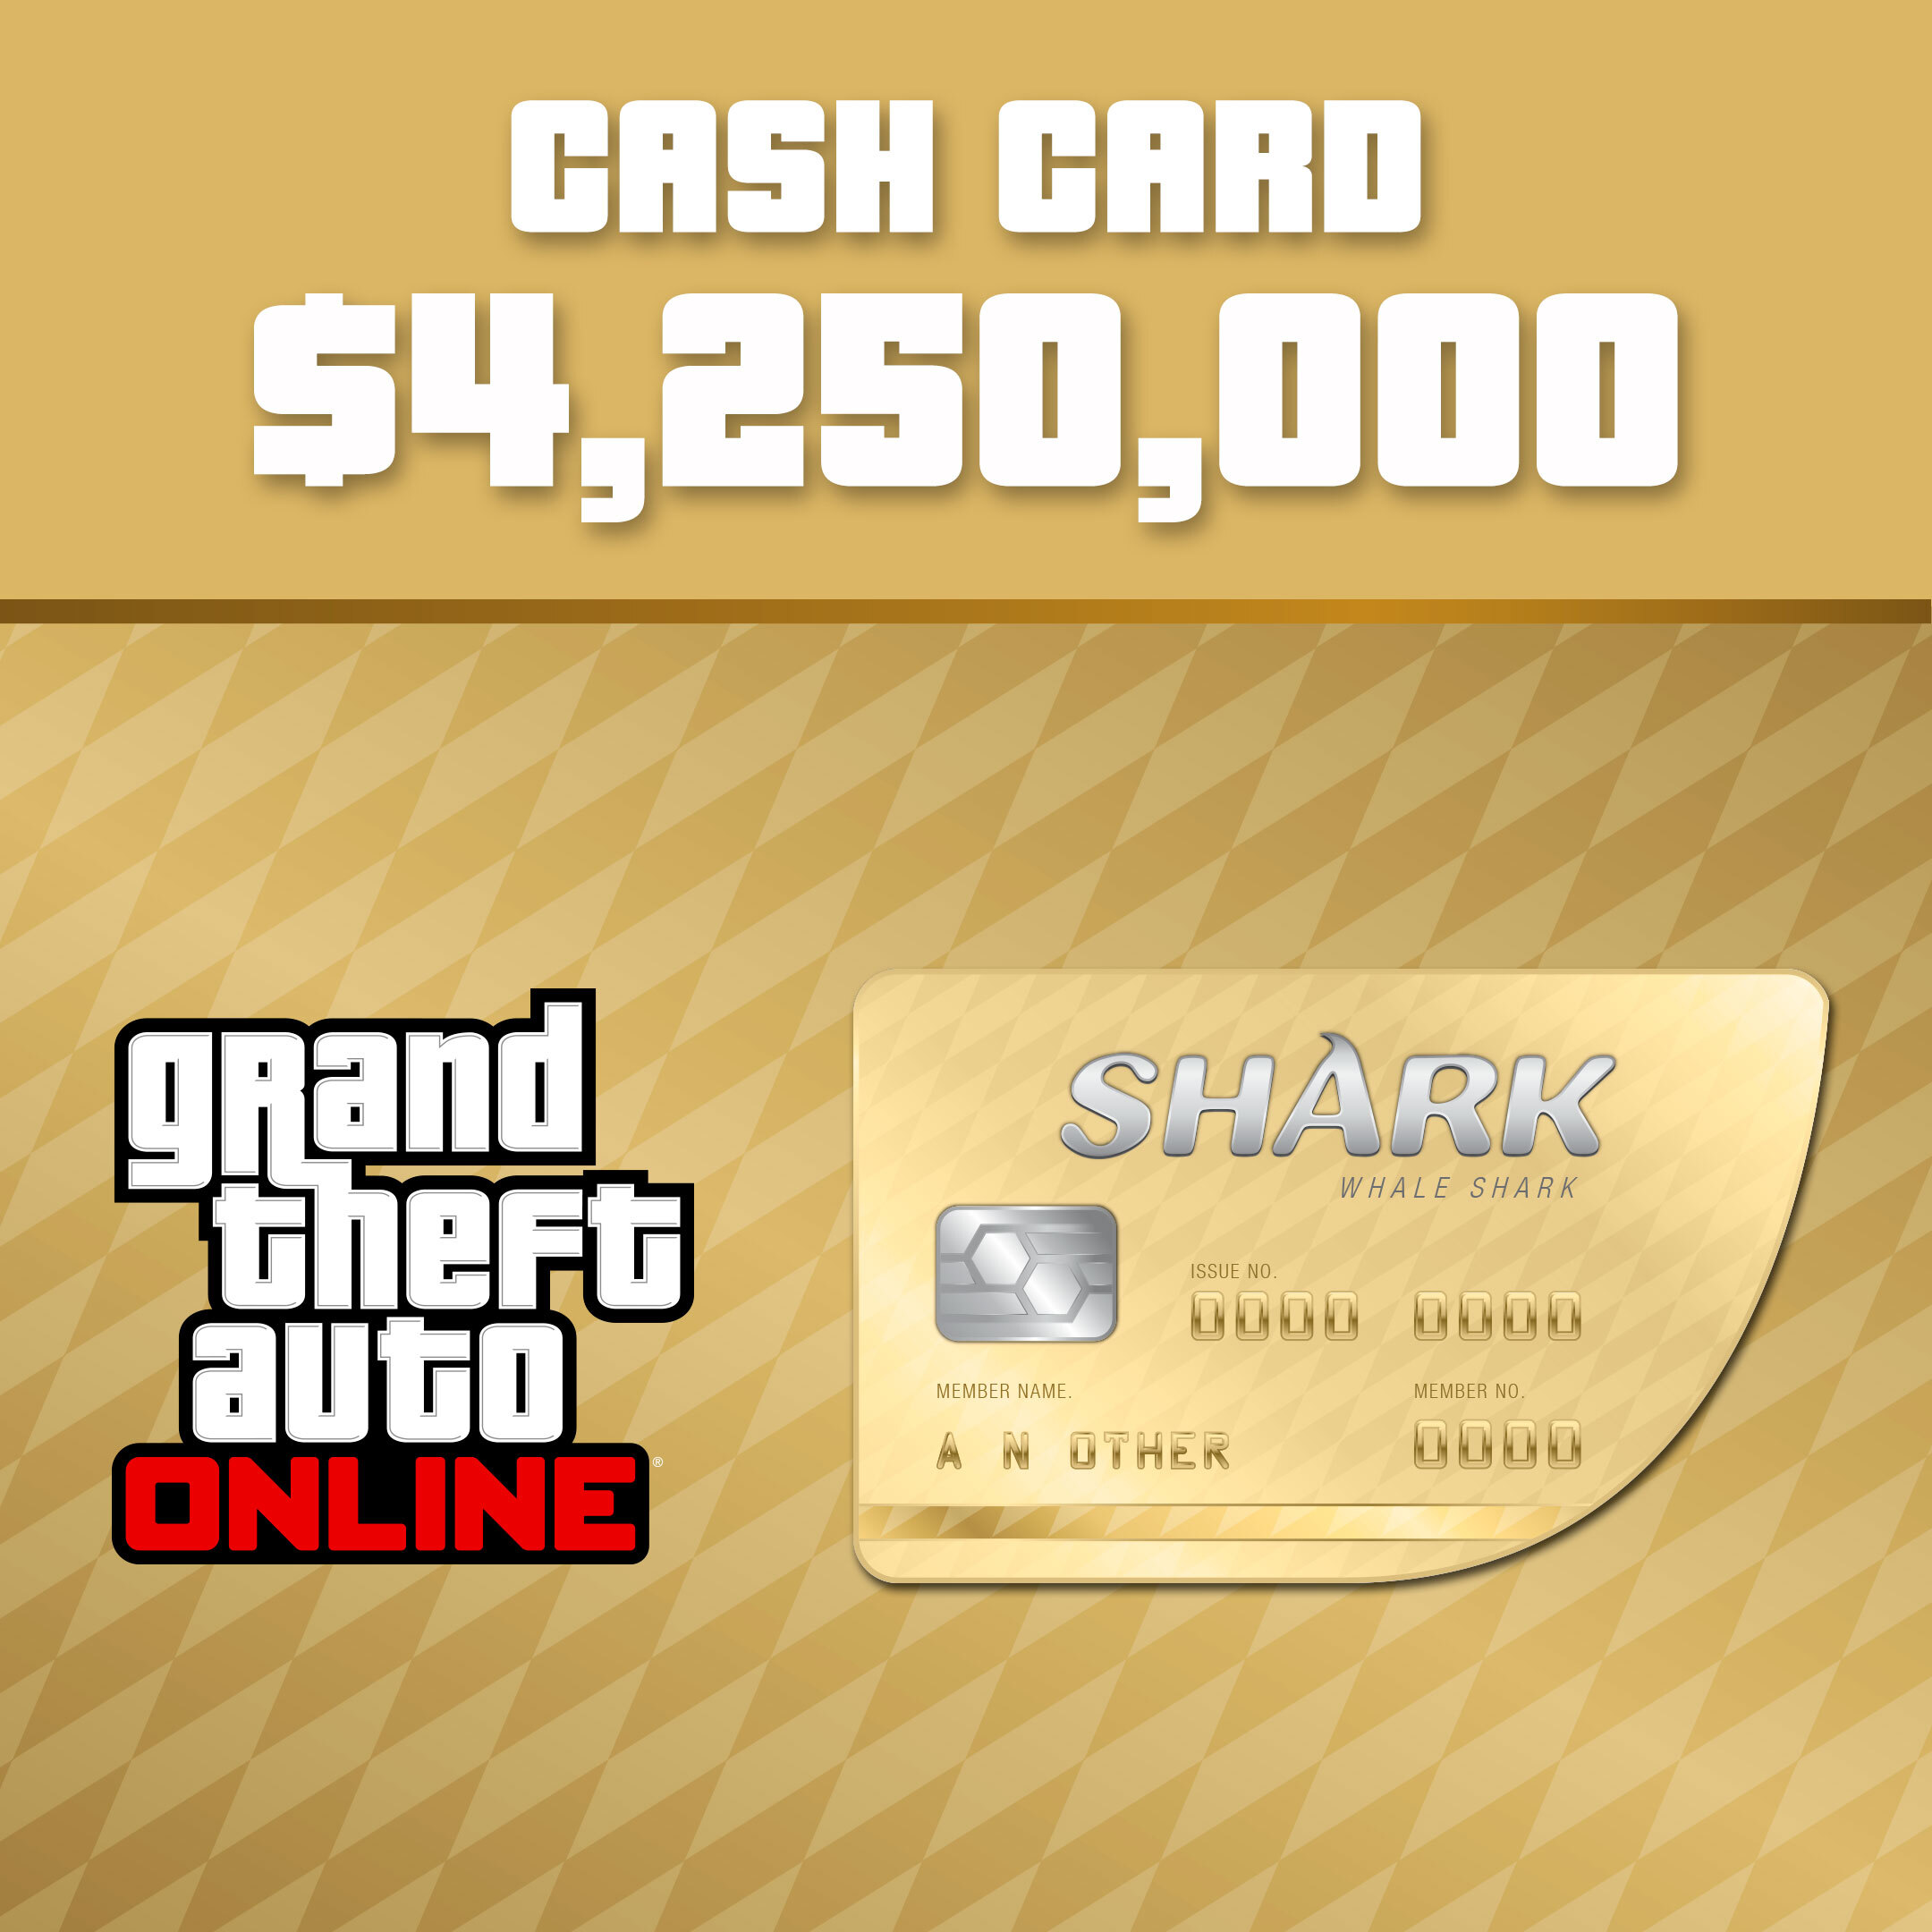 GTA 5 PC Grand Theft Auto V Standart Online Edition ROCKSTAR only Global